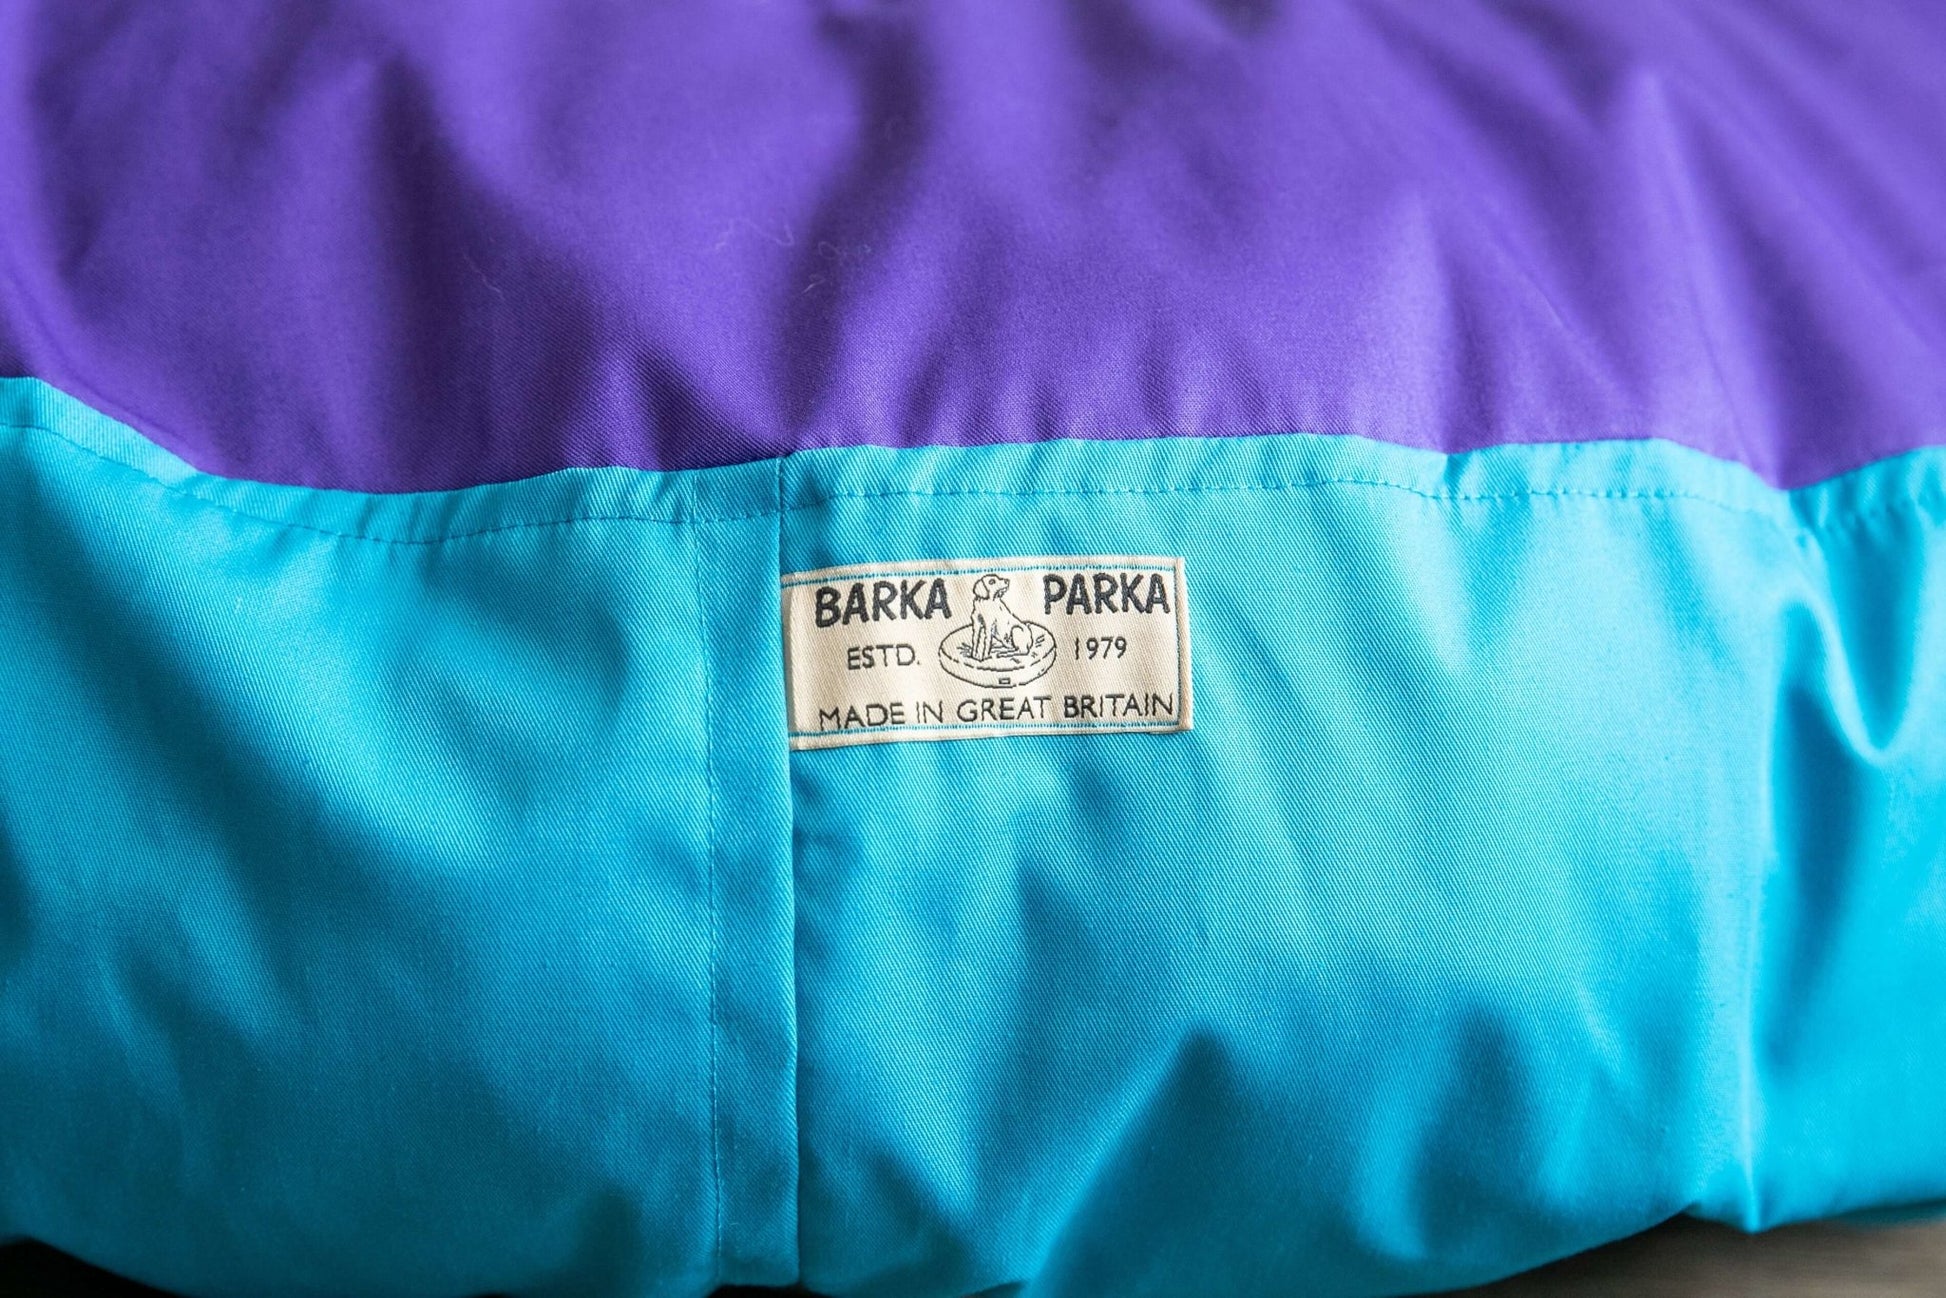 Barka Parka Dog Bed - Purple and peacock blue - Barka Parka Dog Beds